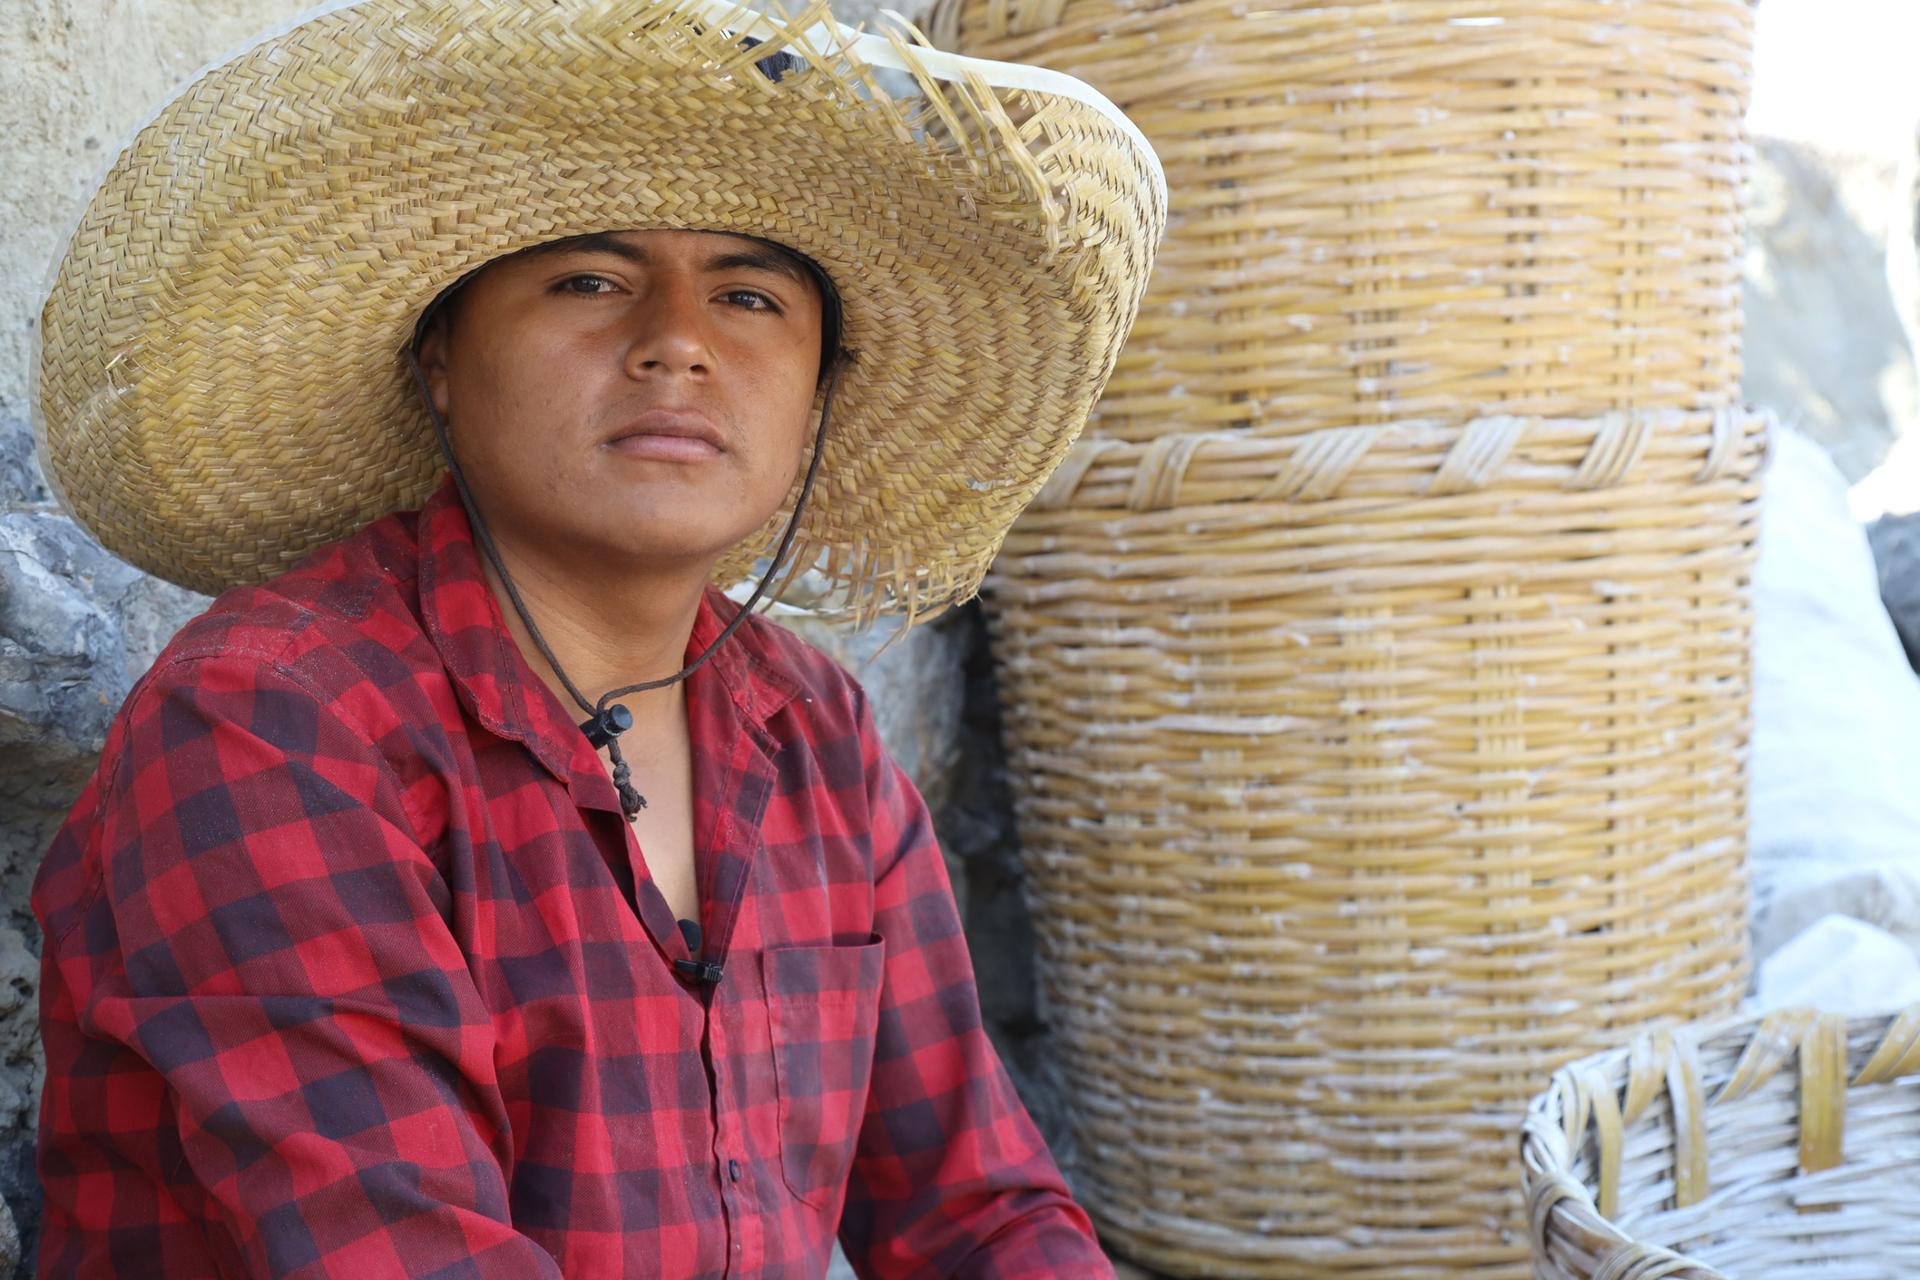 Pedro Salas Díaz, 23, has worked as a salt farmer most of his life.